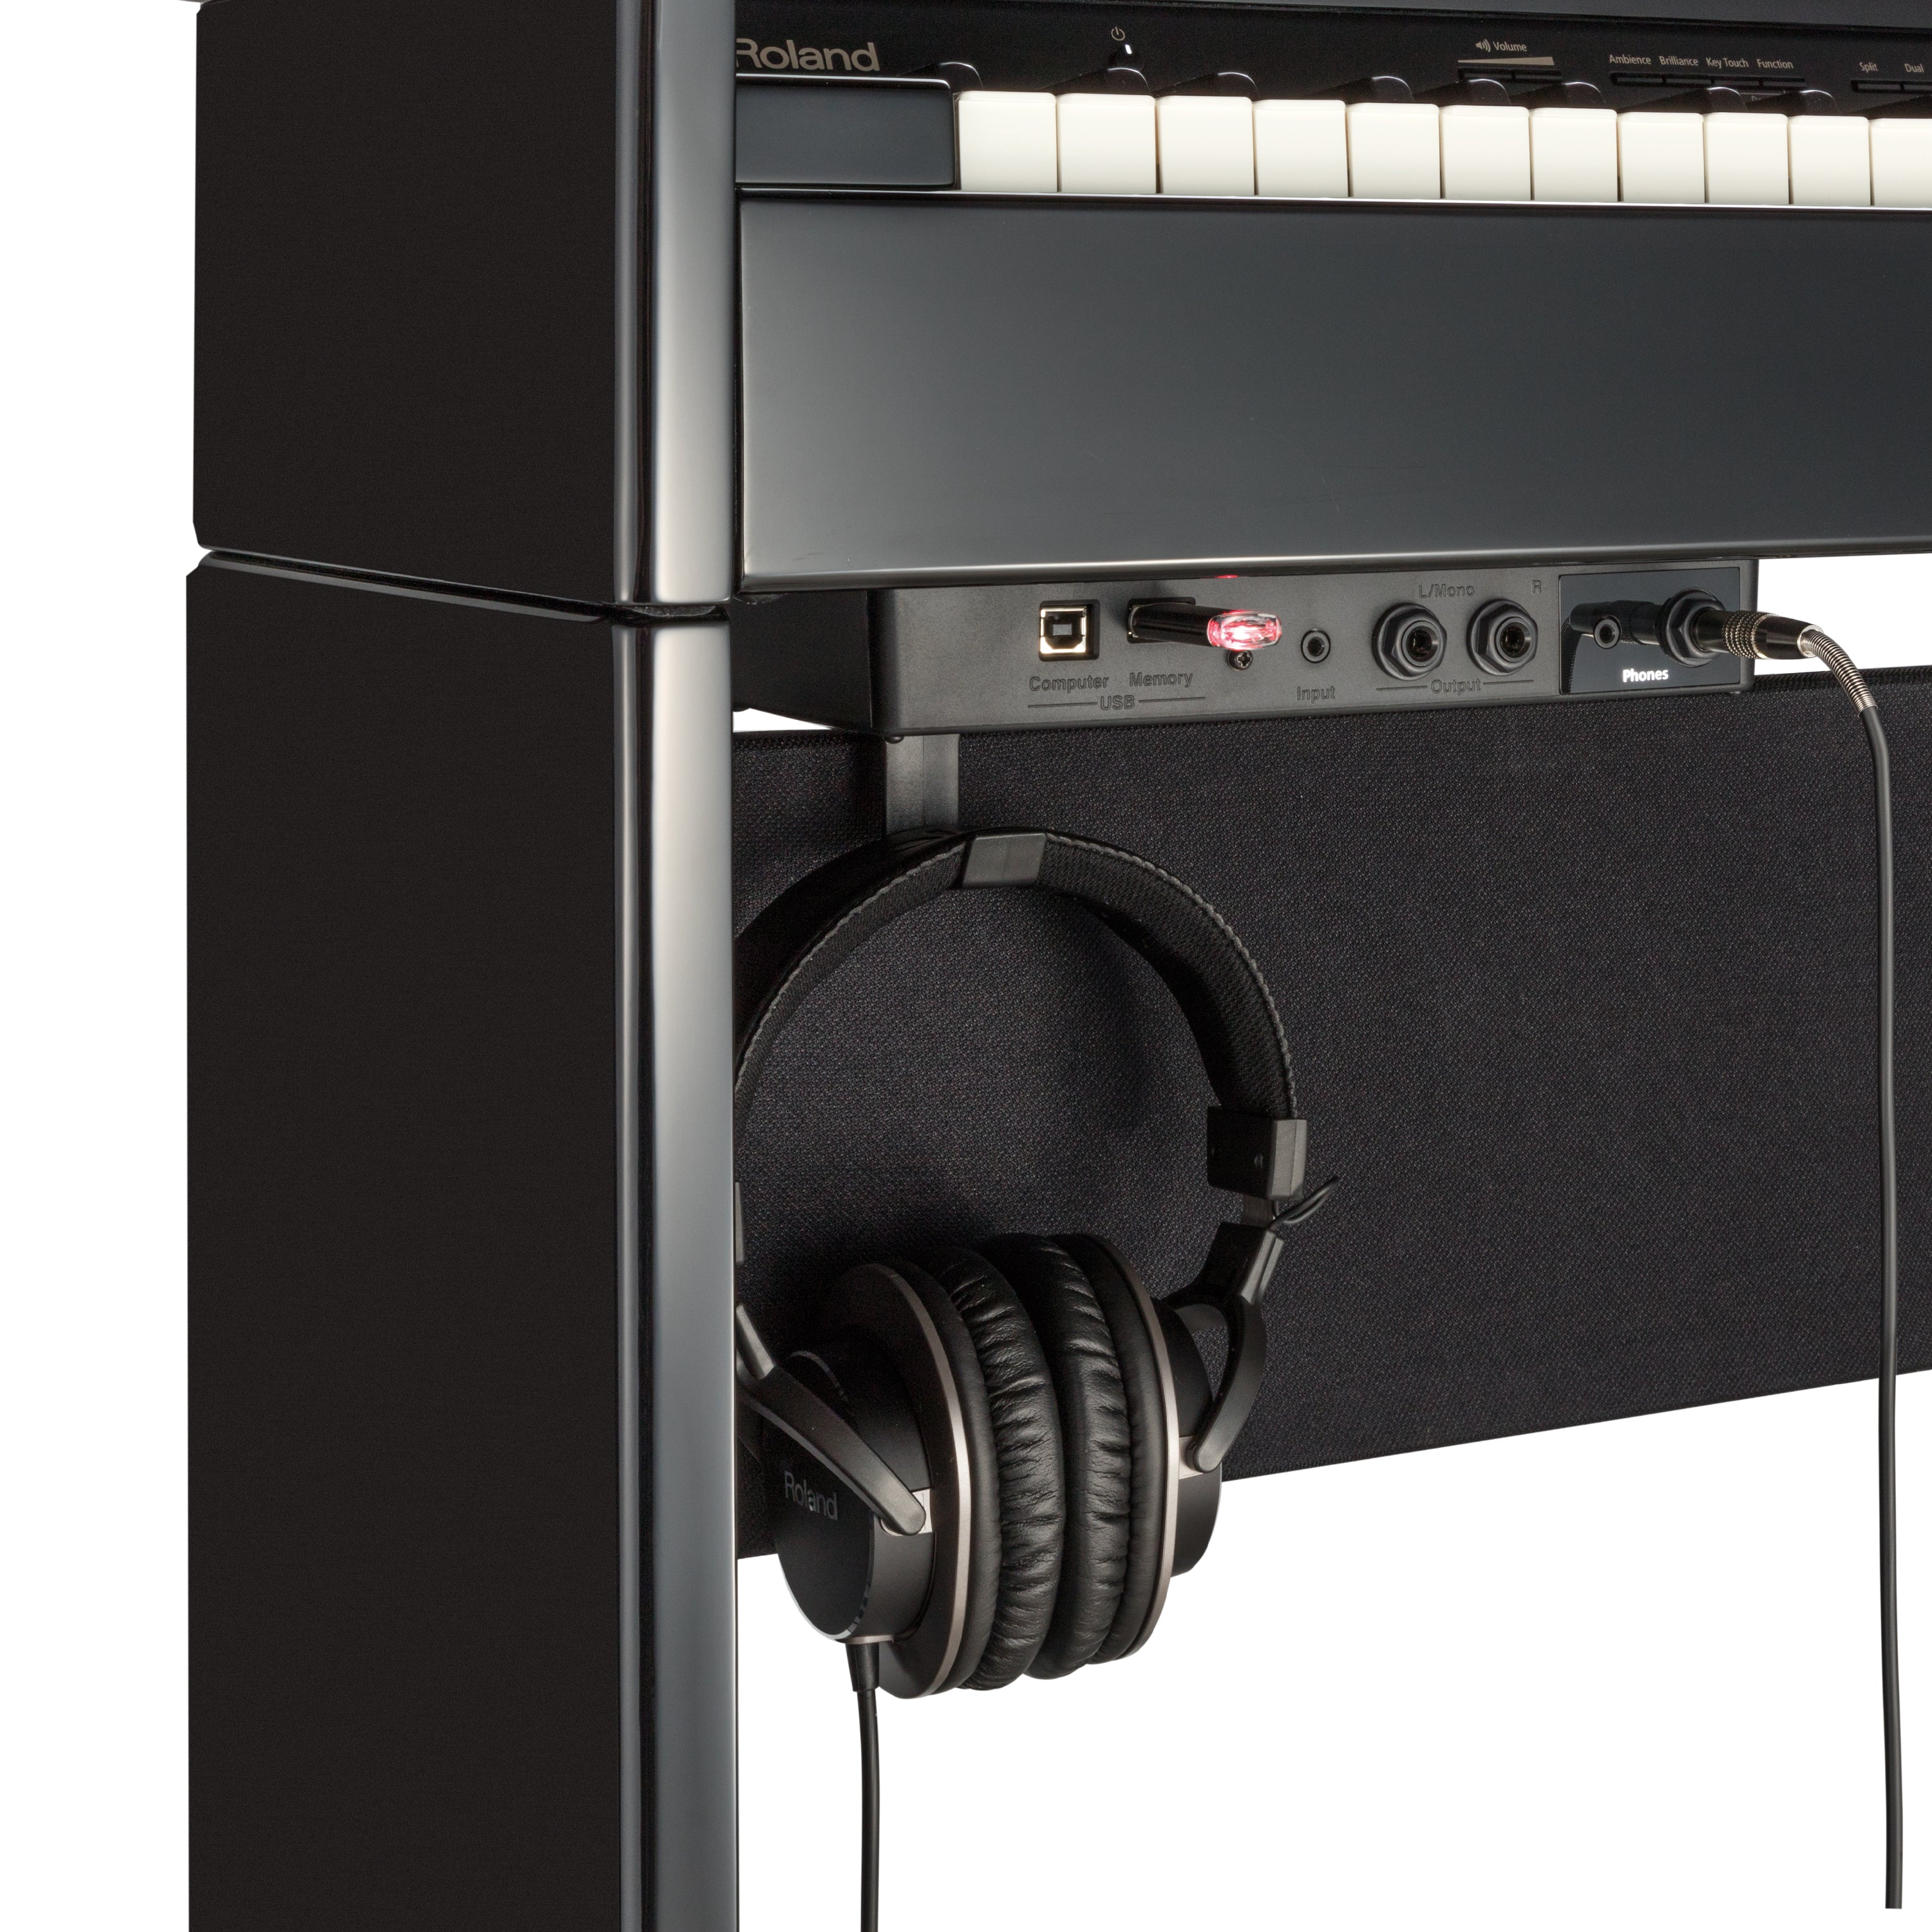 Roland DP603 Digital Piano - Contemporary Black - input and output jacks with headphone hook